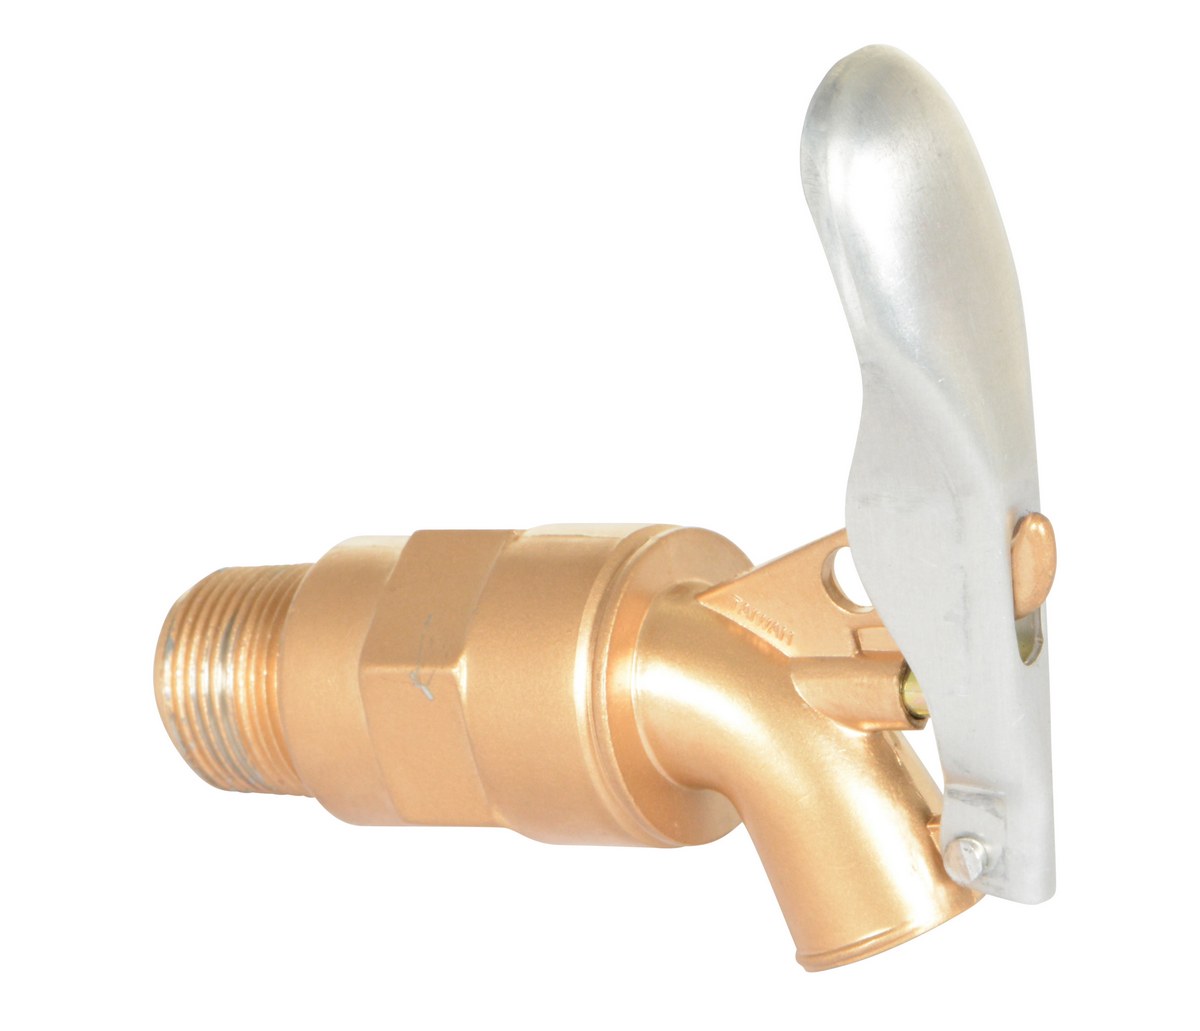 Vestil DFT-RIGID Brass Manual Drum Faucet with Lockable Handle Vestil Manufacturing 